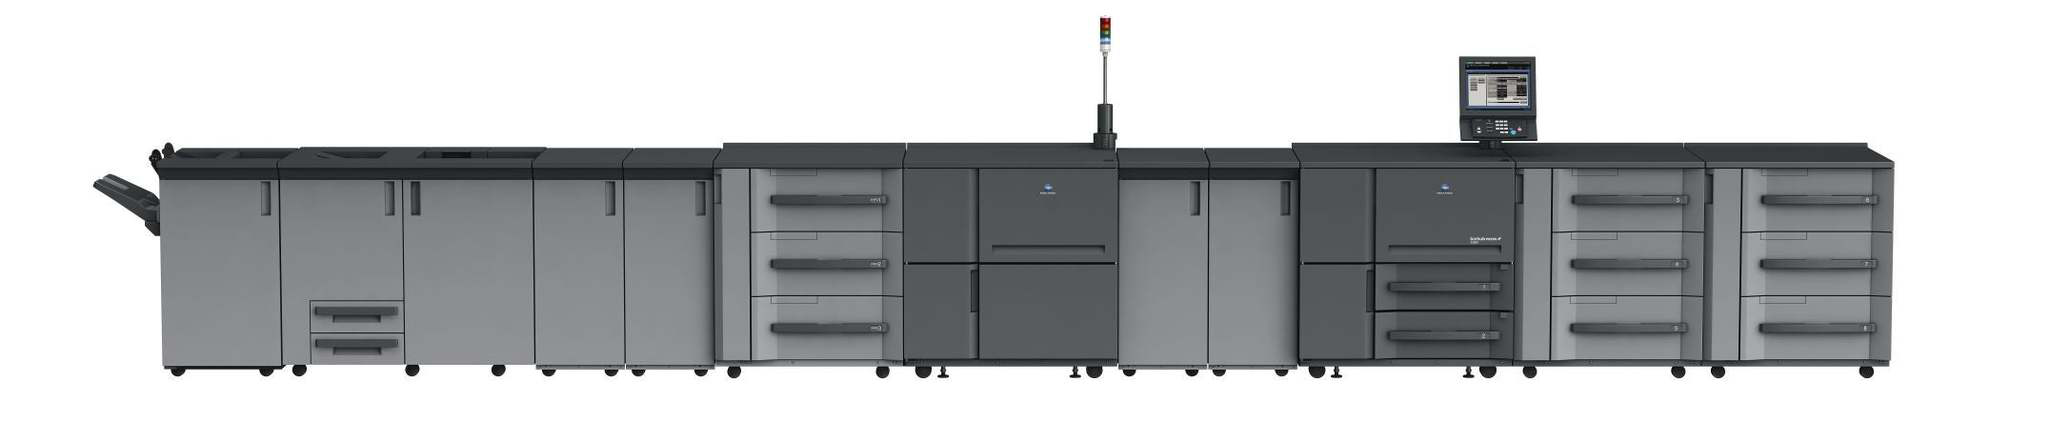 bizhub PRESS 2250P монохромная производительная система печати